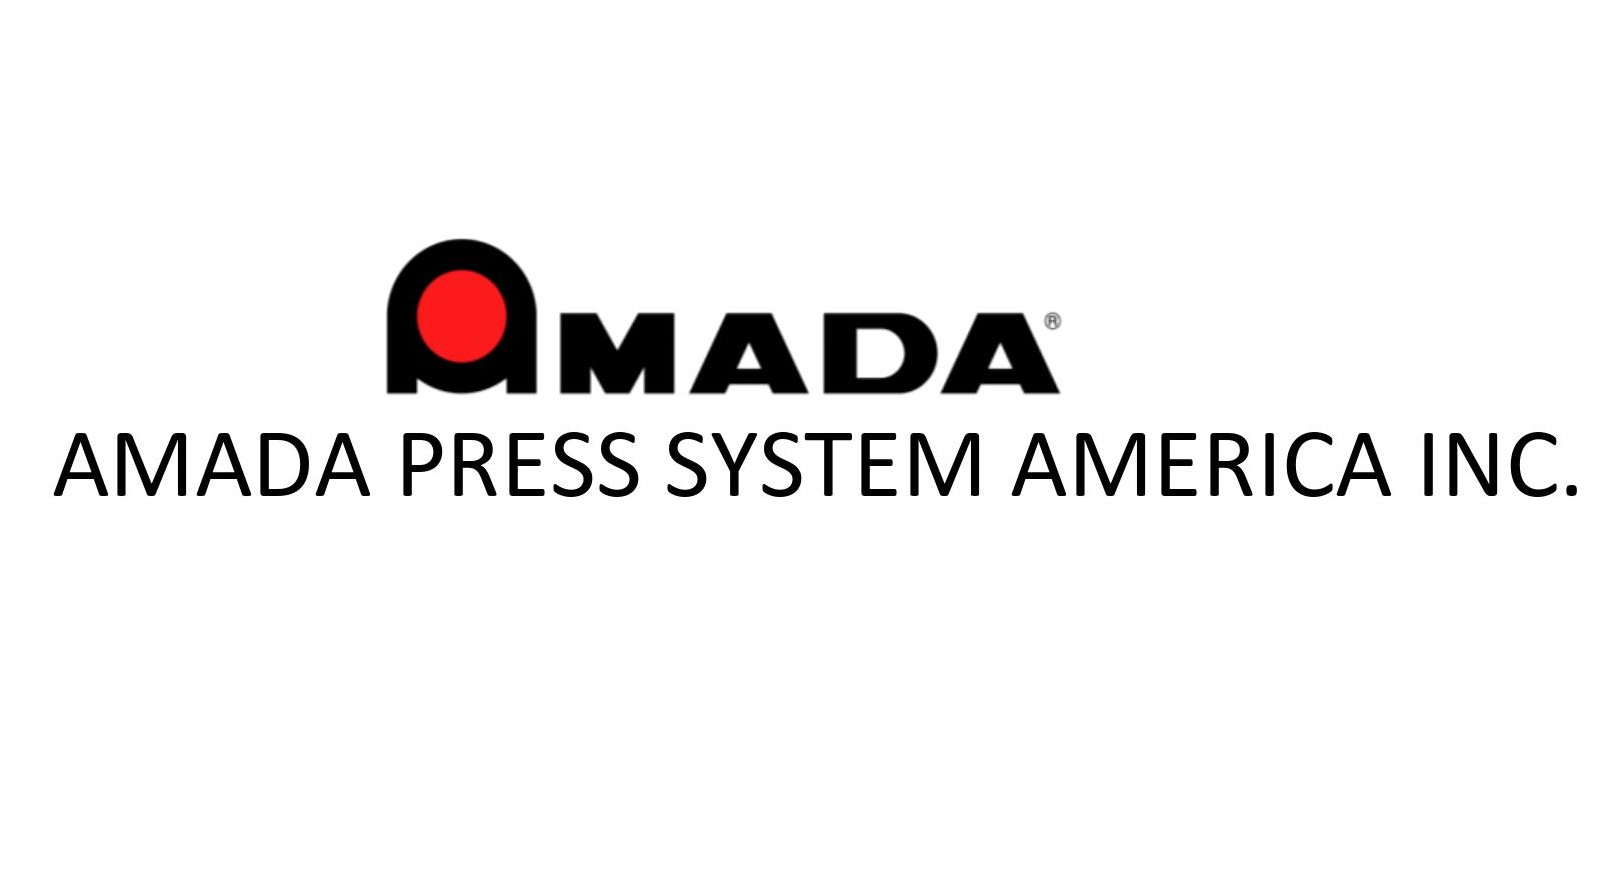 AMADA Press System America